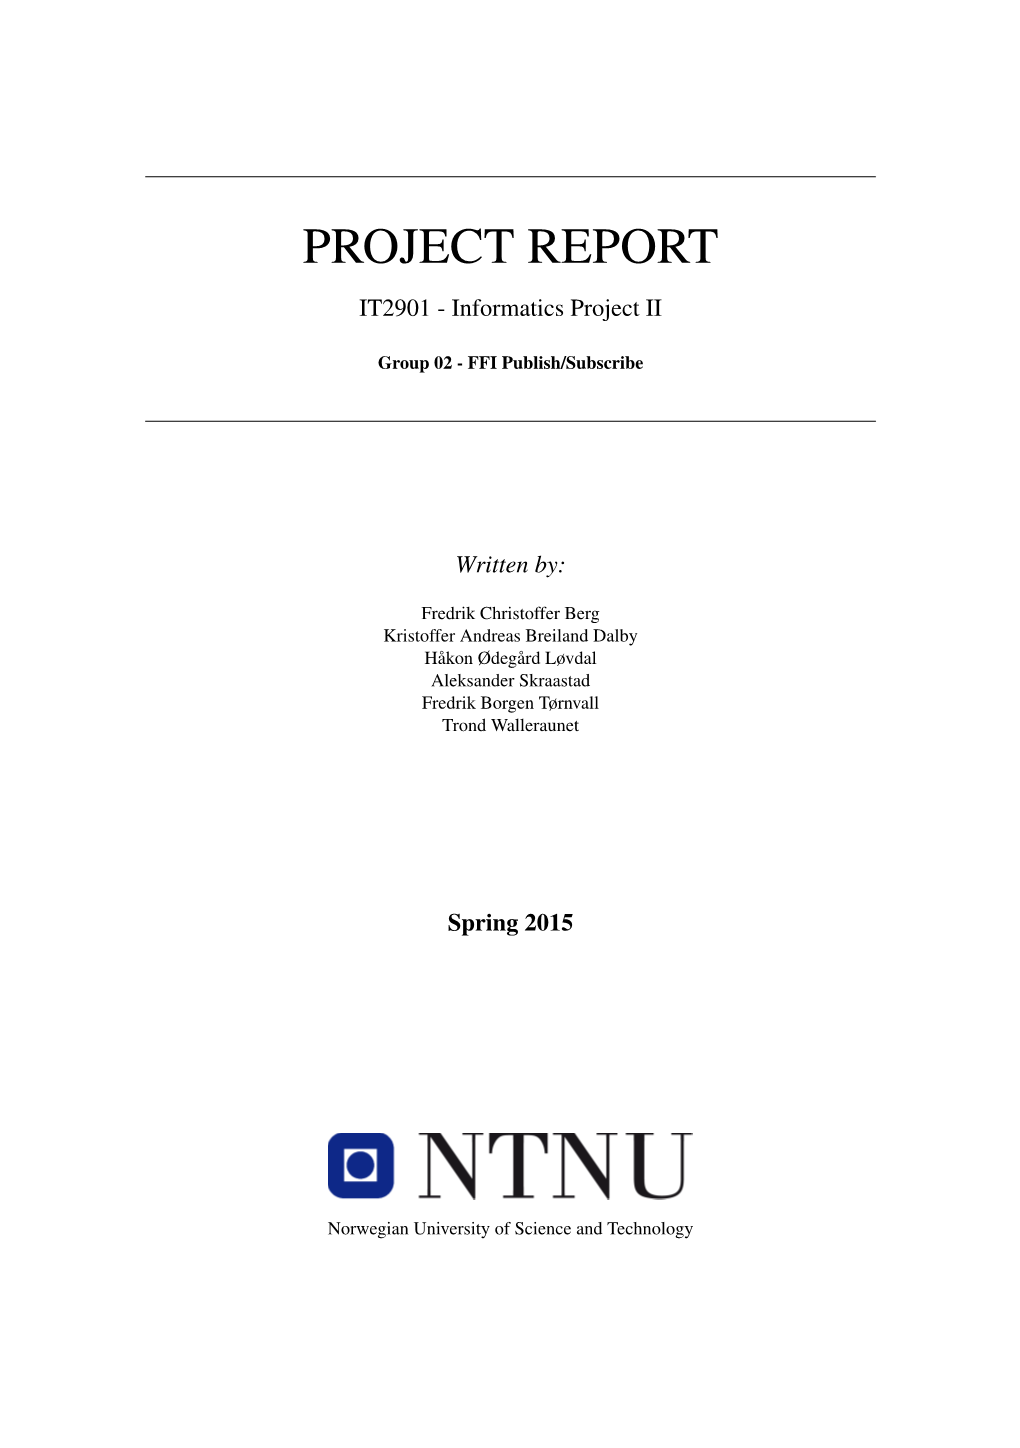 PROJECT REPORT IT2901 - Informatics Project II